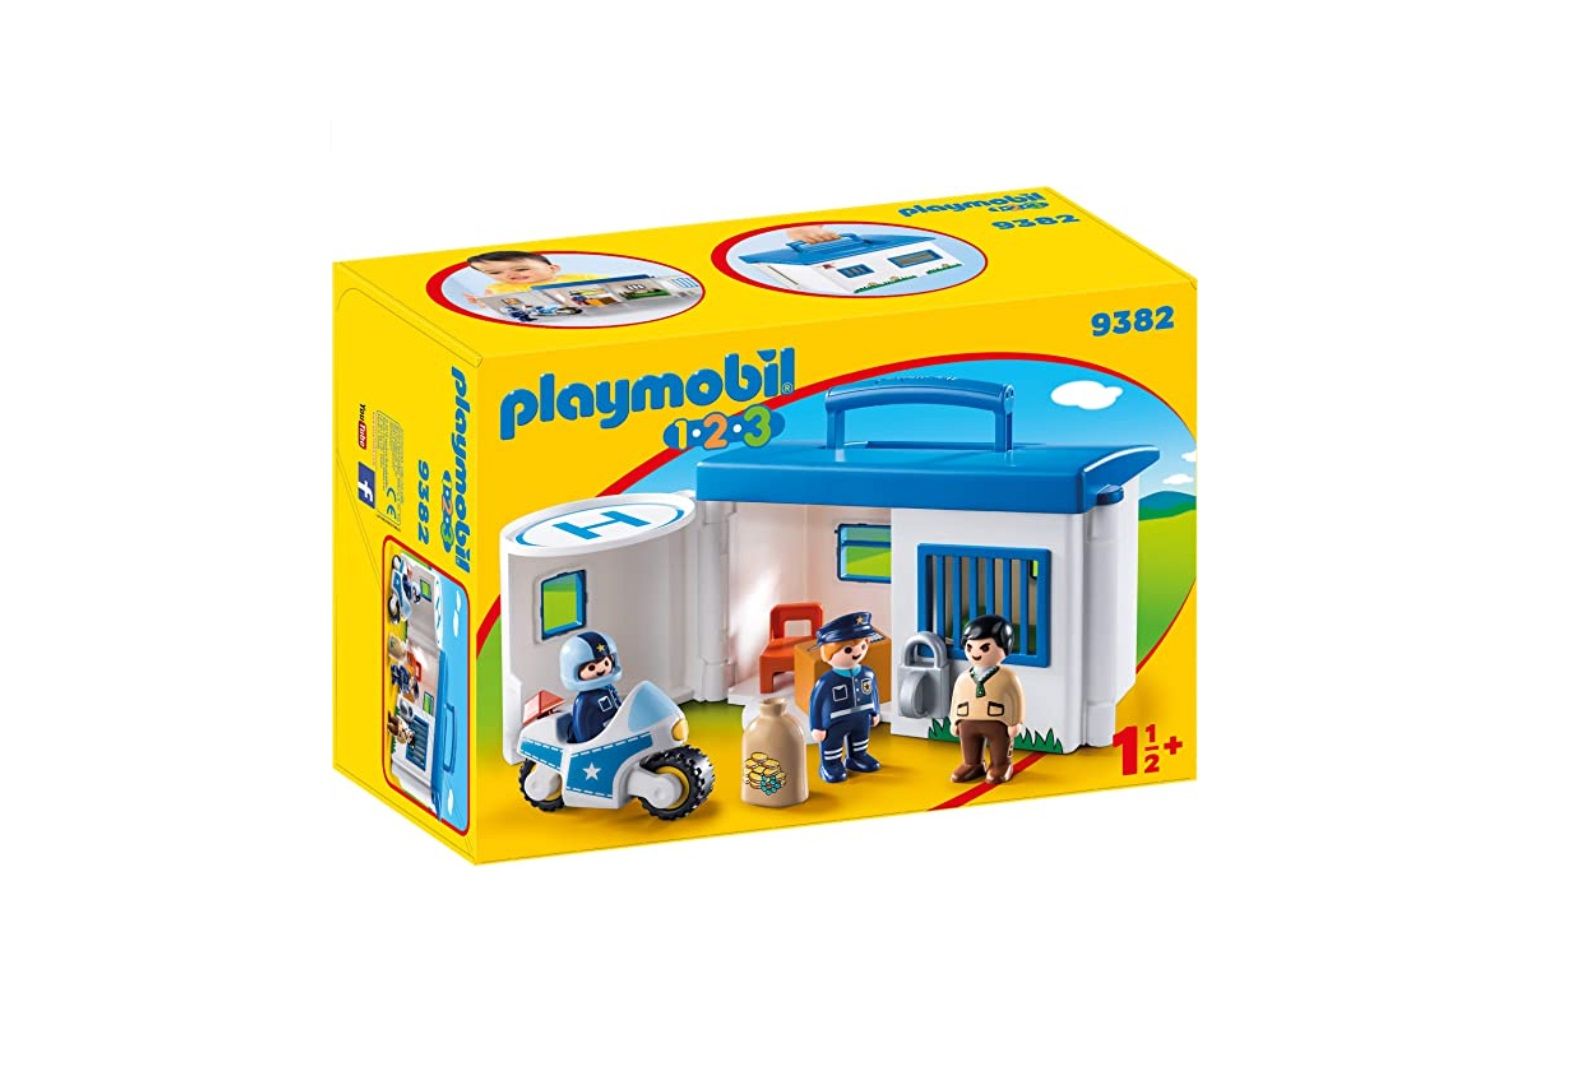 ¡Chollazo! Maletín comisaría de Policía de Playmobil 1.2.3 por sólo 16,99€ (antes 30€)